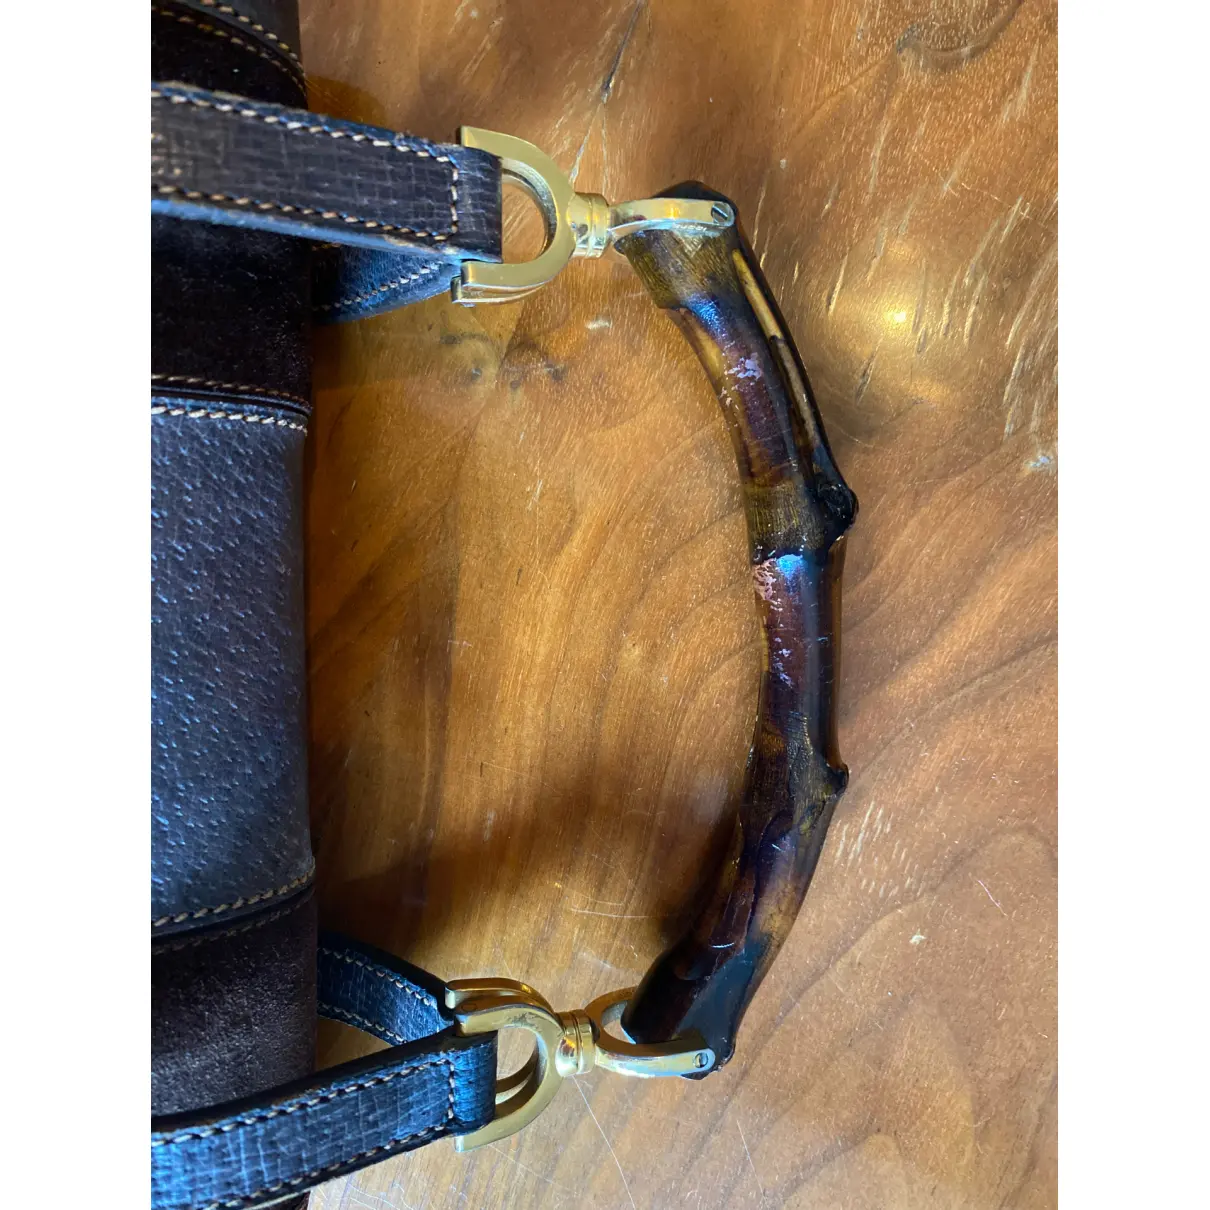 Buy Gucci Bamboo leather handbag online - Vintage